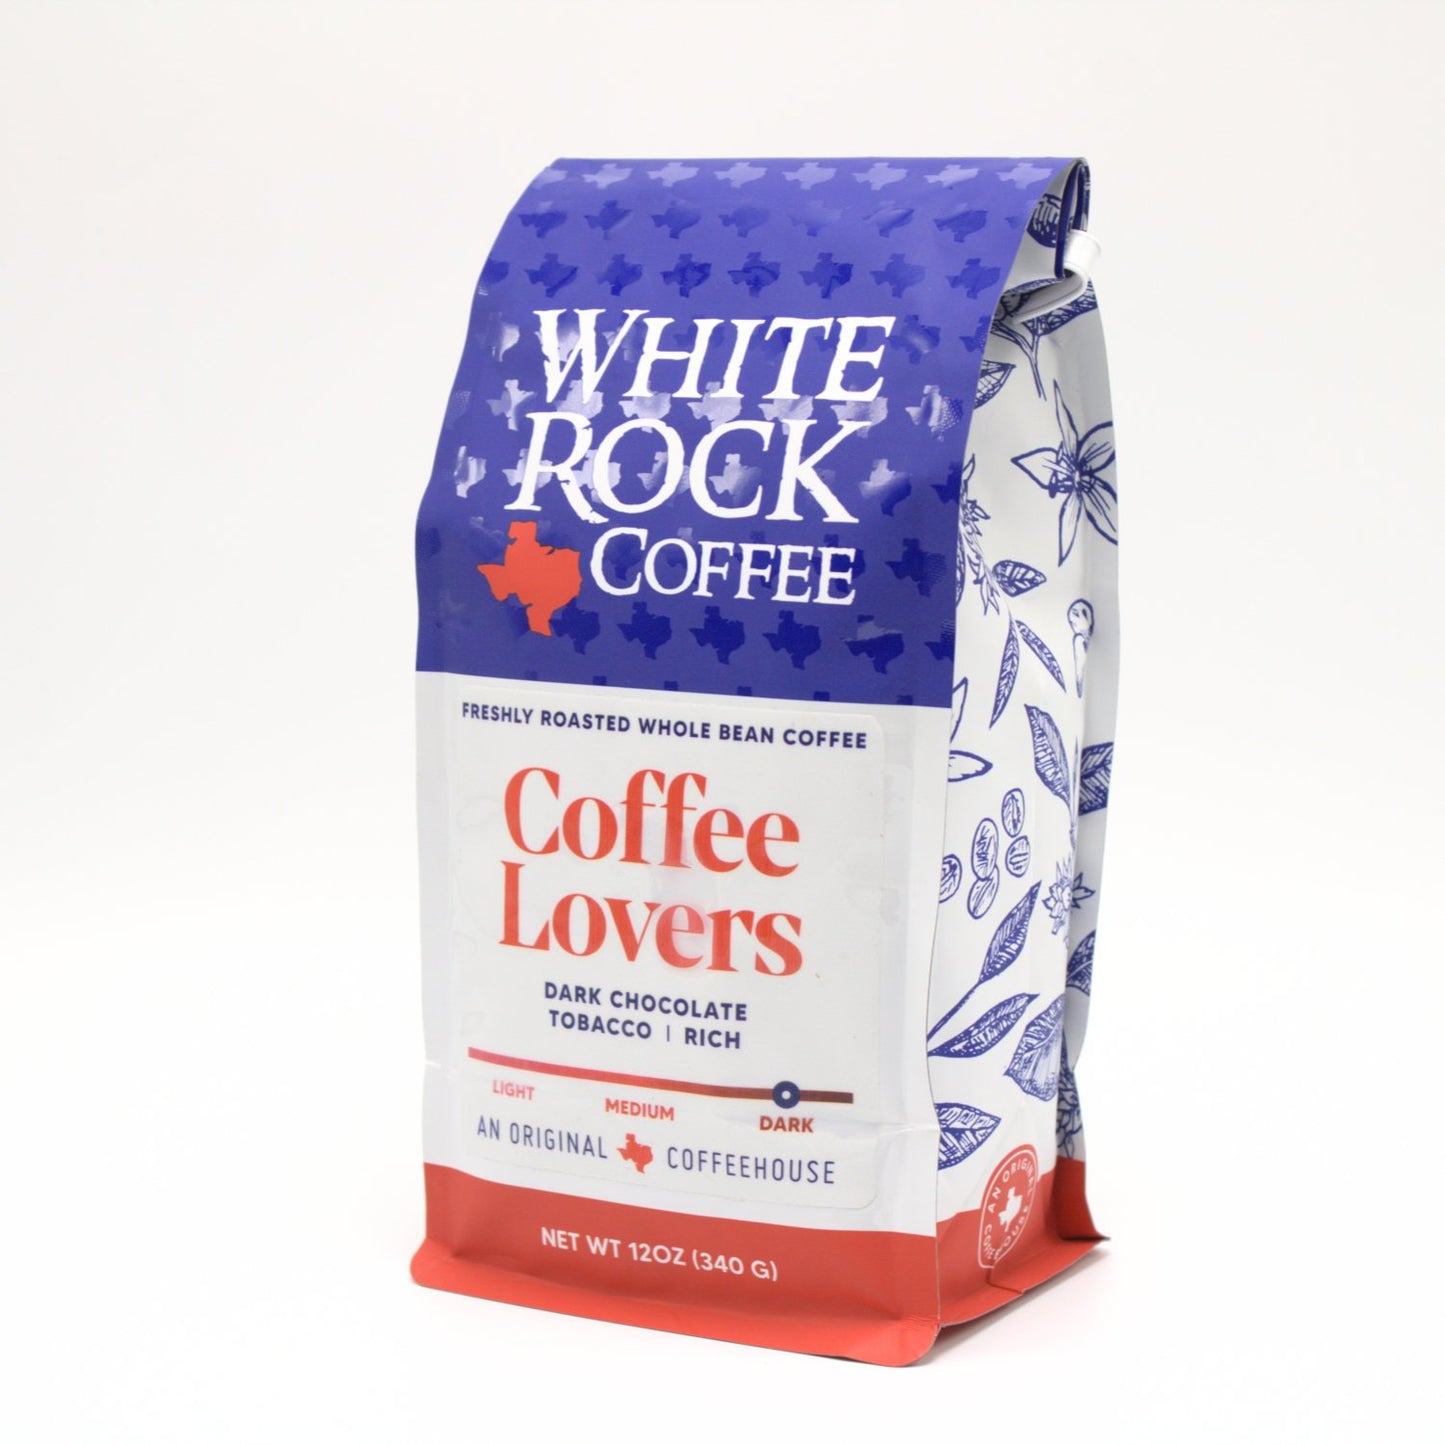 Coffee Lovers - White Rock Coffee